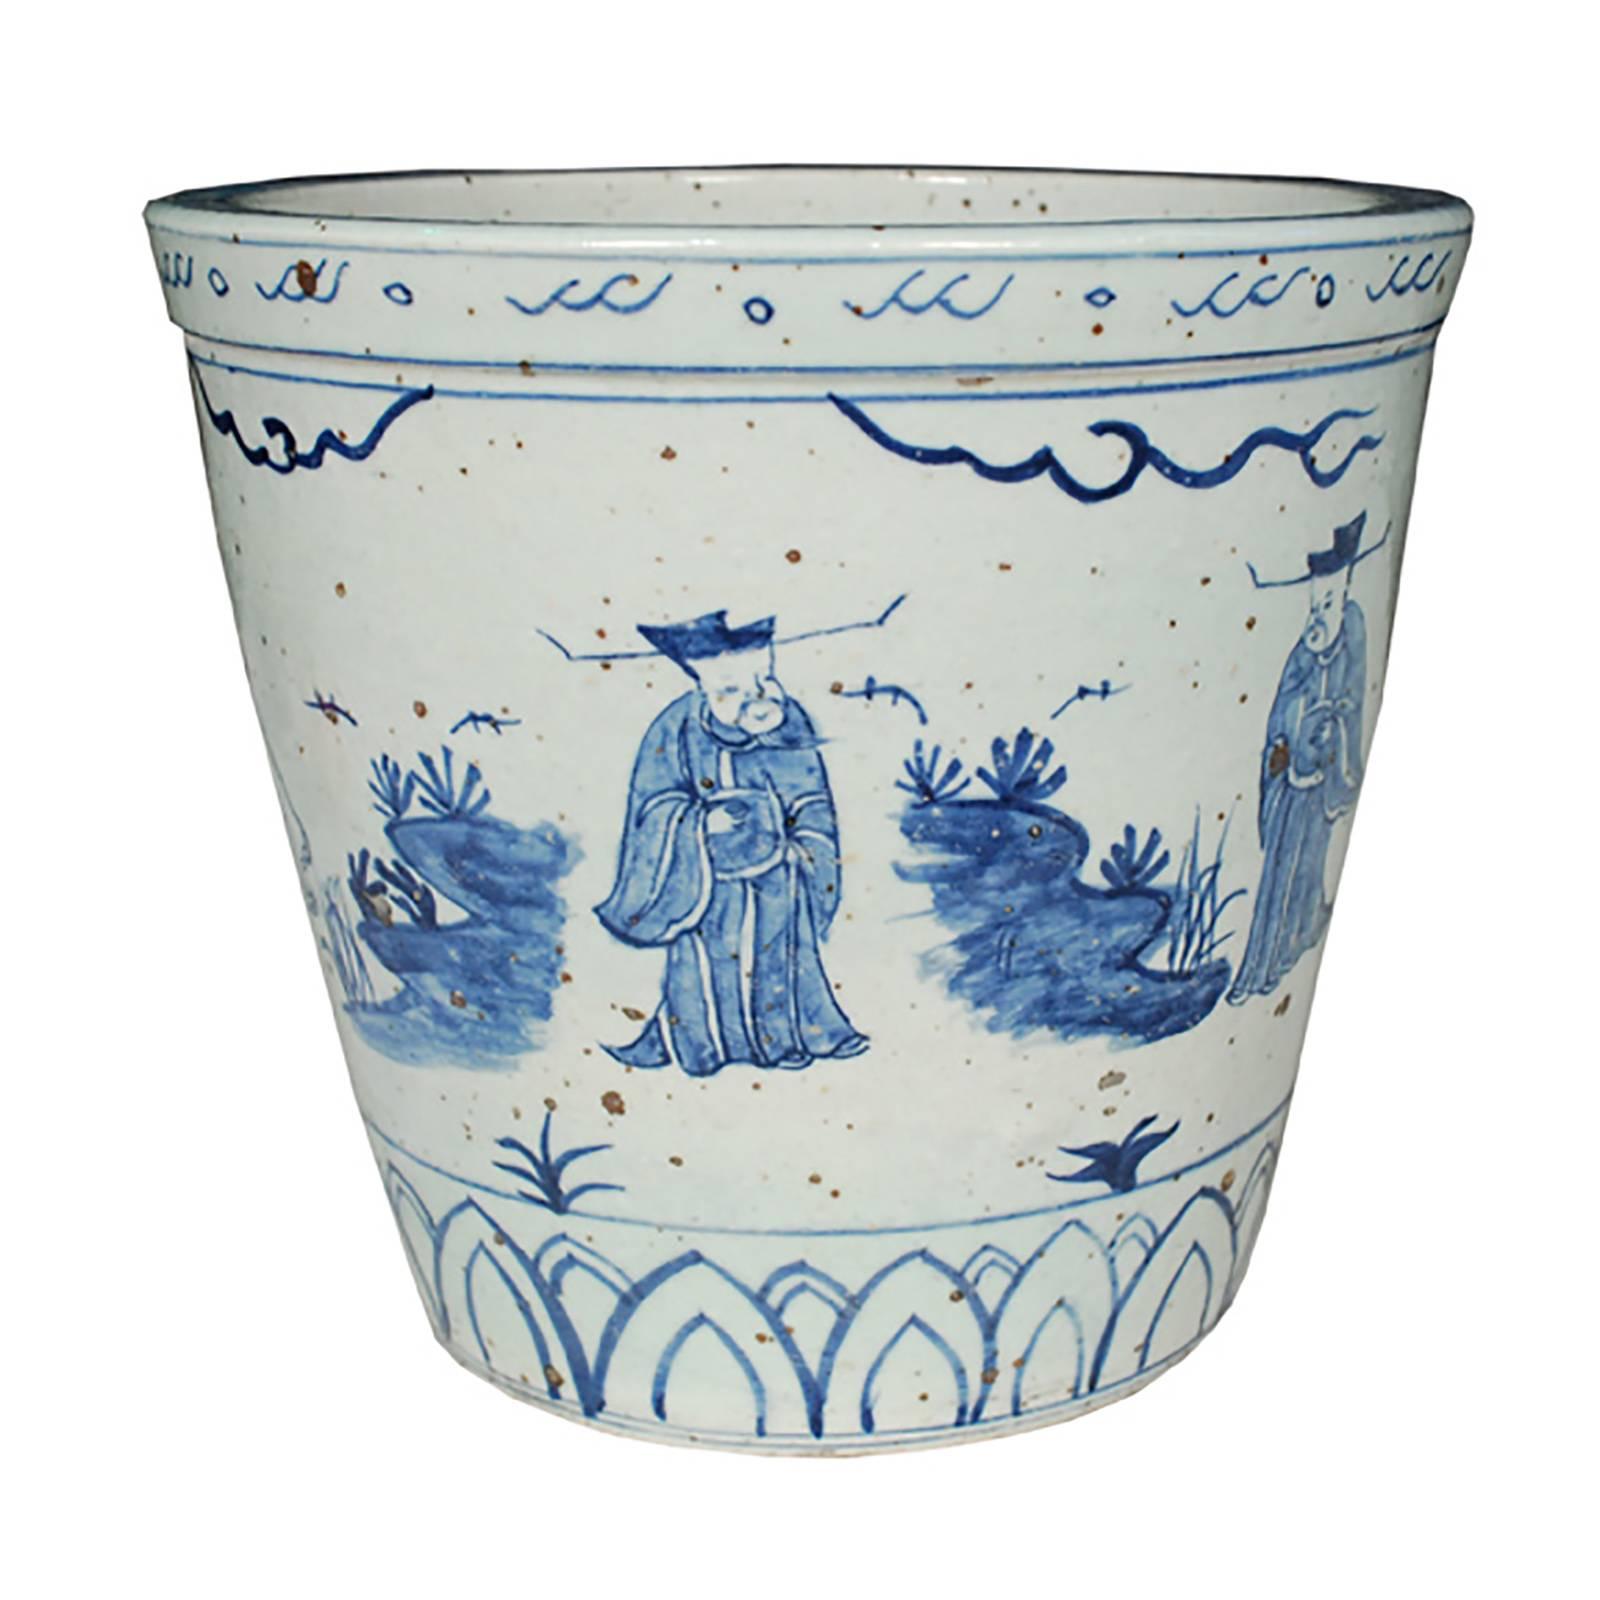 Glazed Chinese Blue and White Scroll Pot with Yagi Scene